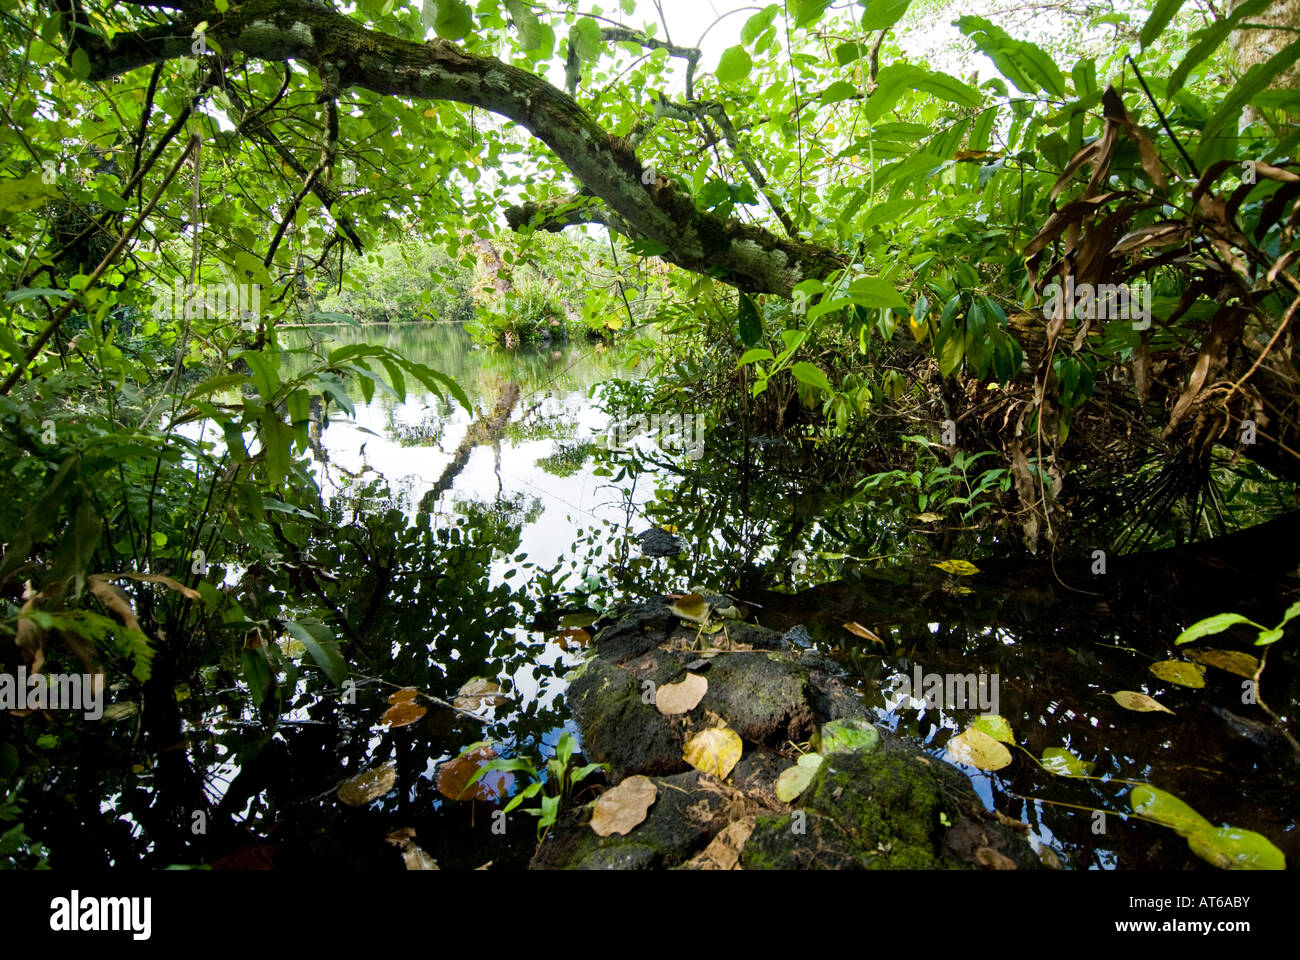 Feuchtgebiete Mangroven trail Samoa Upolu Südküste in der Nähe von SAANAPU  Saanapu-Sataoa Mangrove Conservation Area Pflanze Schlamm Stockfotografie -  Alamy